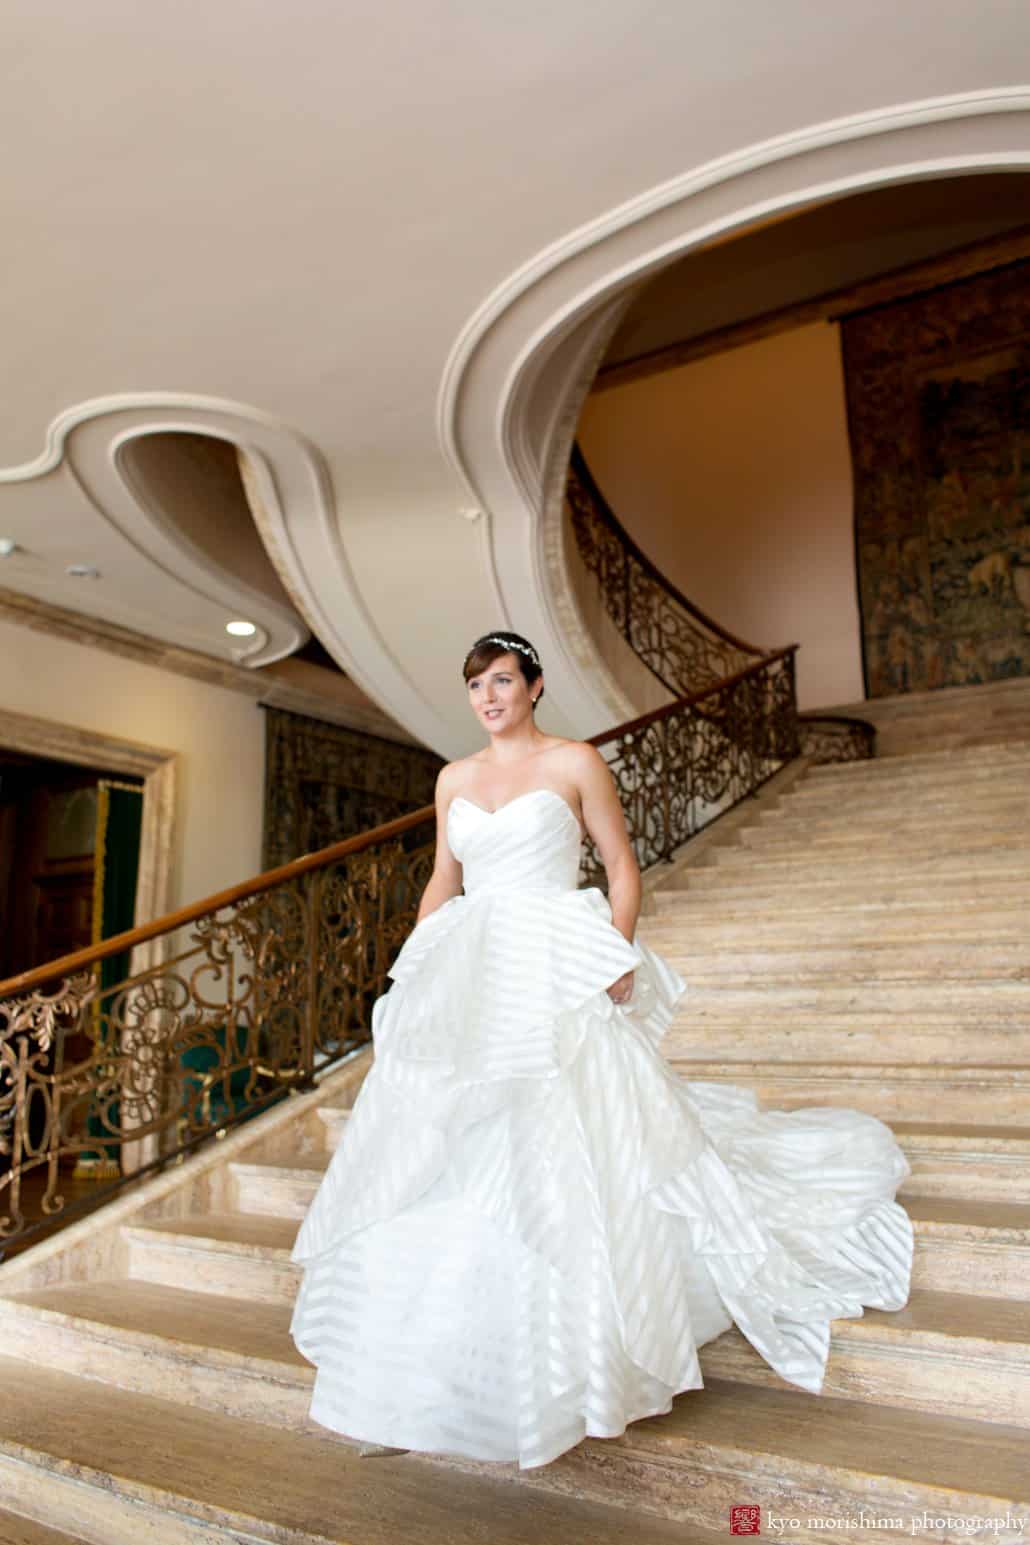 Bride descends the grand staircase at Jasna Polana Princeton wedding, photographed by Kyo Morishima